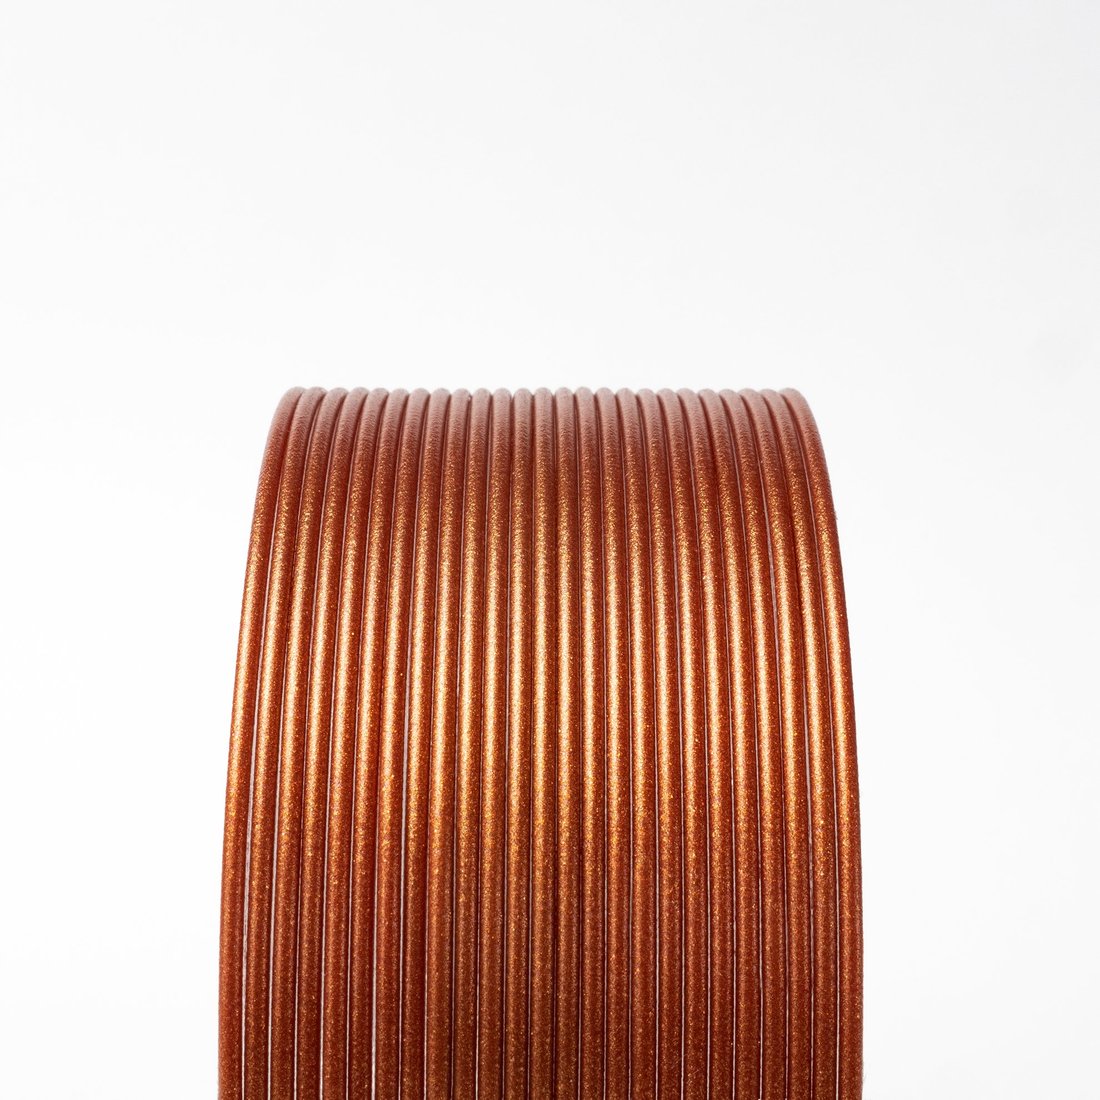 Proto Pasta Burnt Orange Metallic Copper HTPLA - 1.75mm .5KG